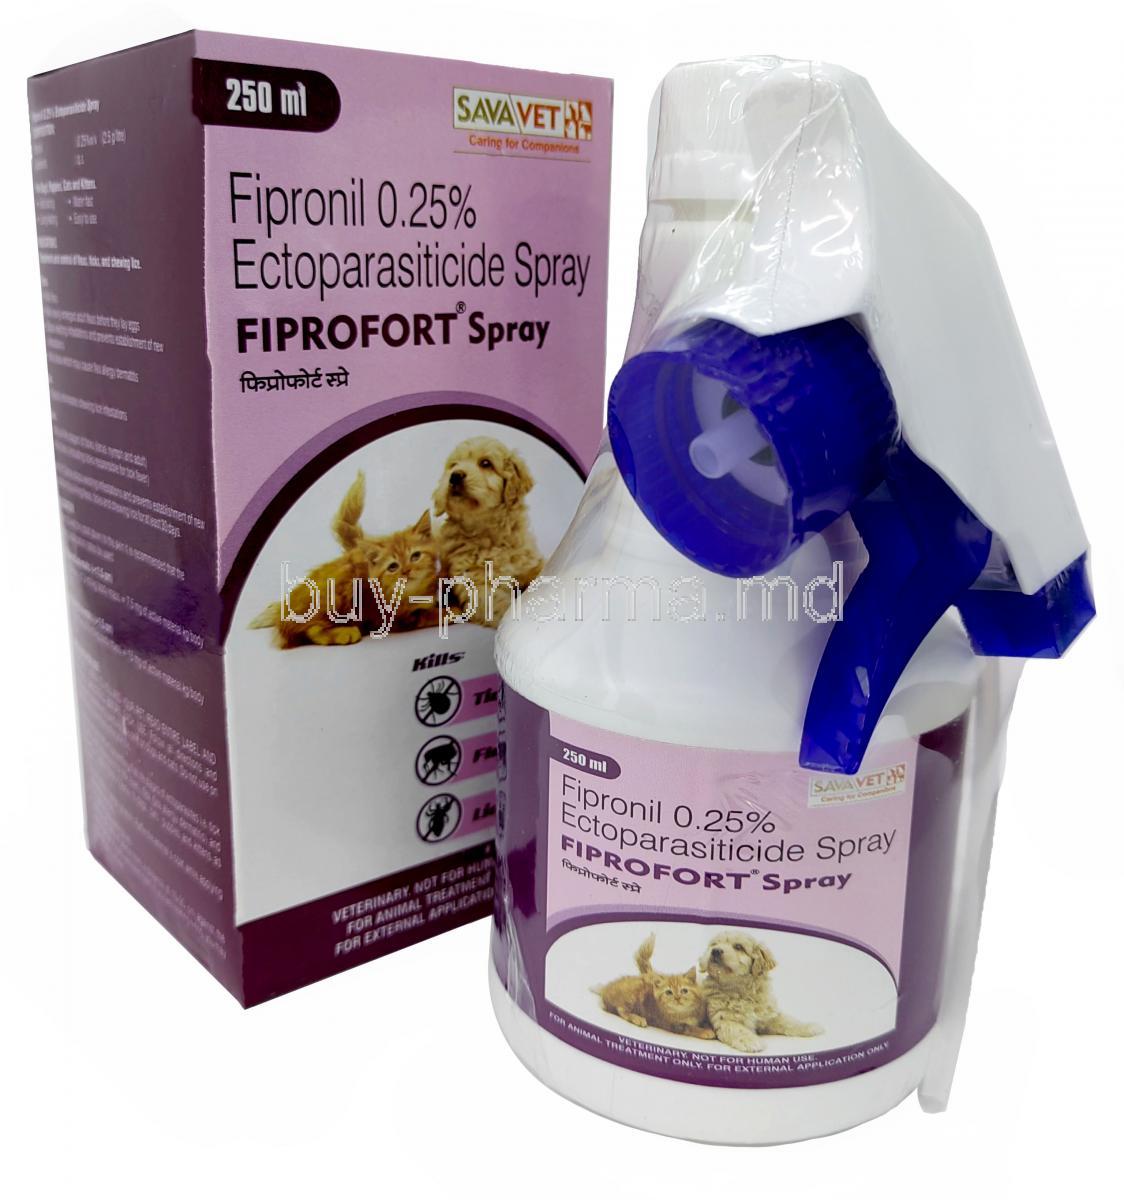 Fiprofort Spray, Fipronil 0.25%w/v, Spray 250mL, SAVA Healthcare, Box, Bottle